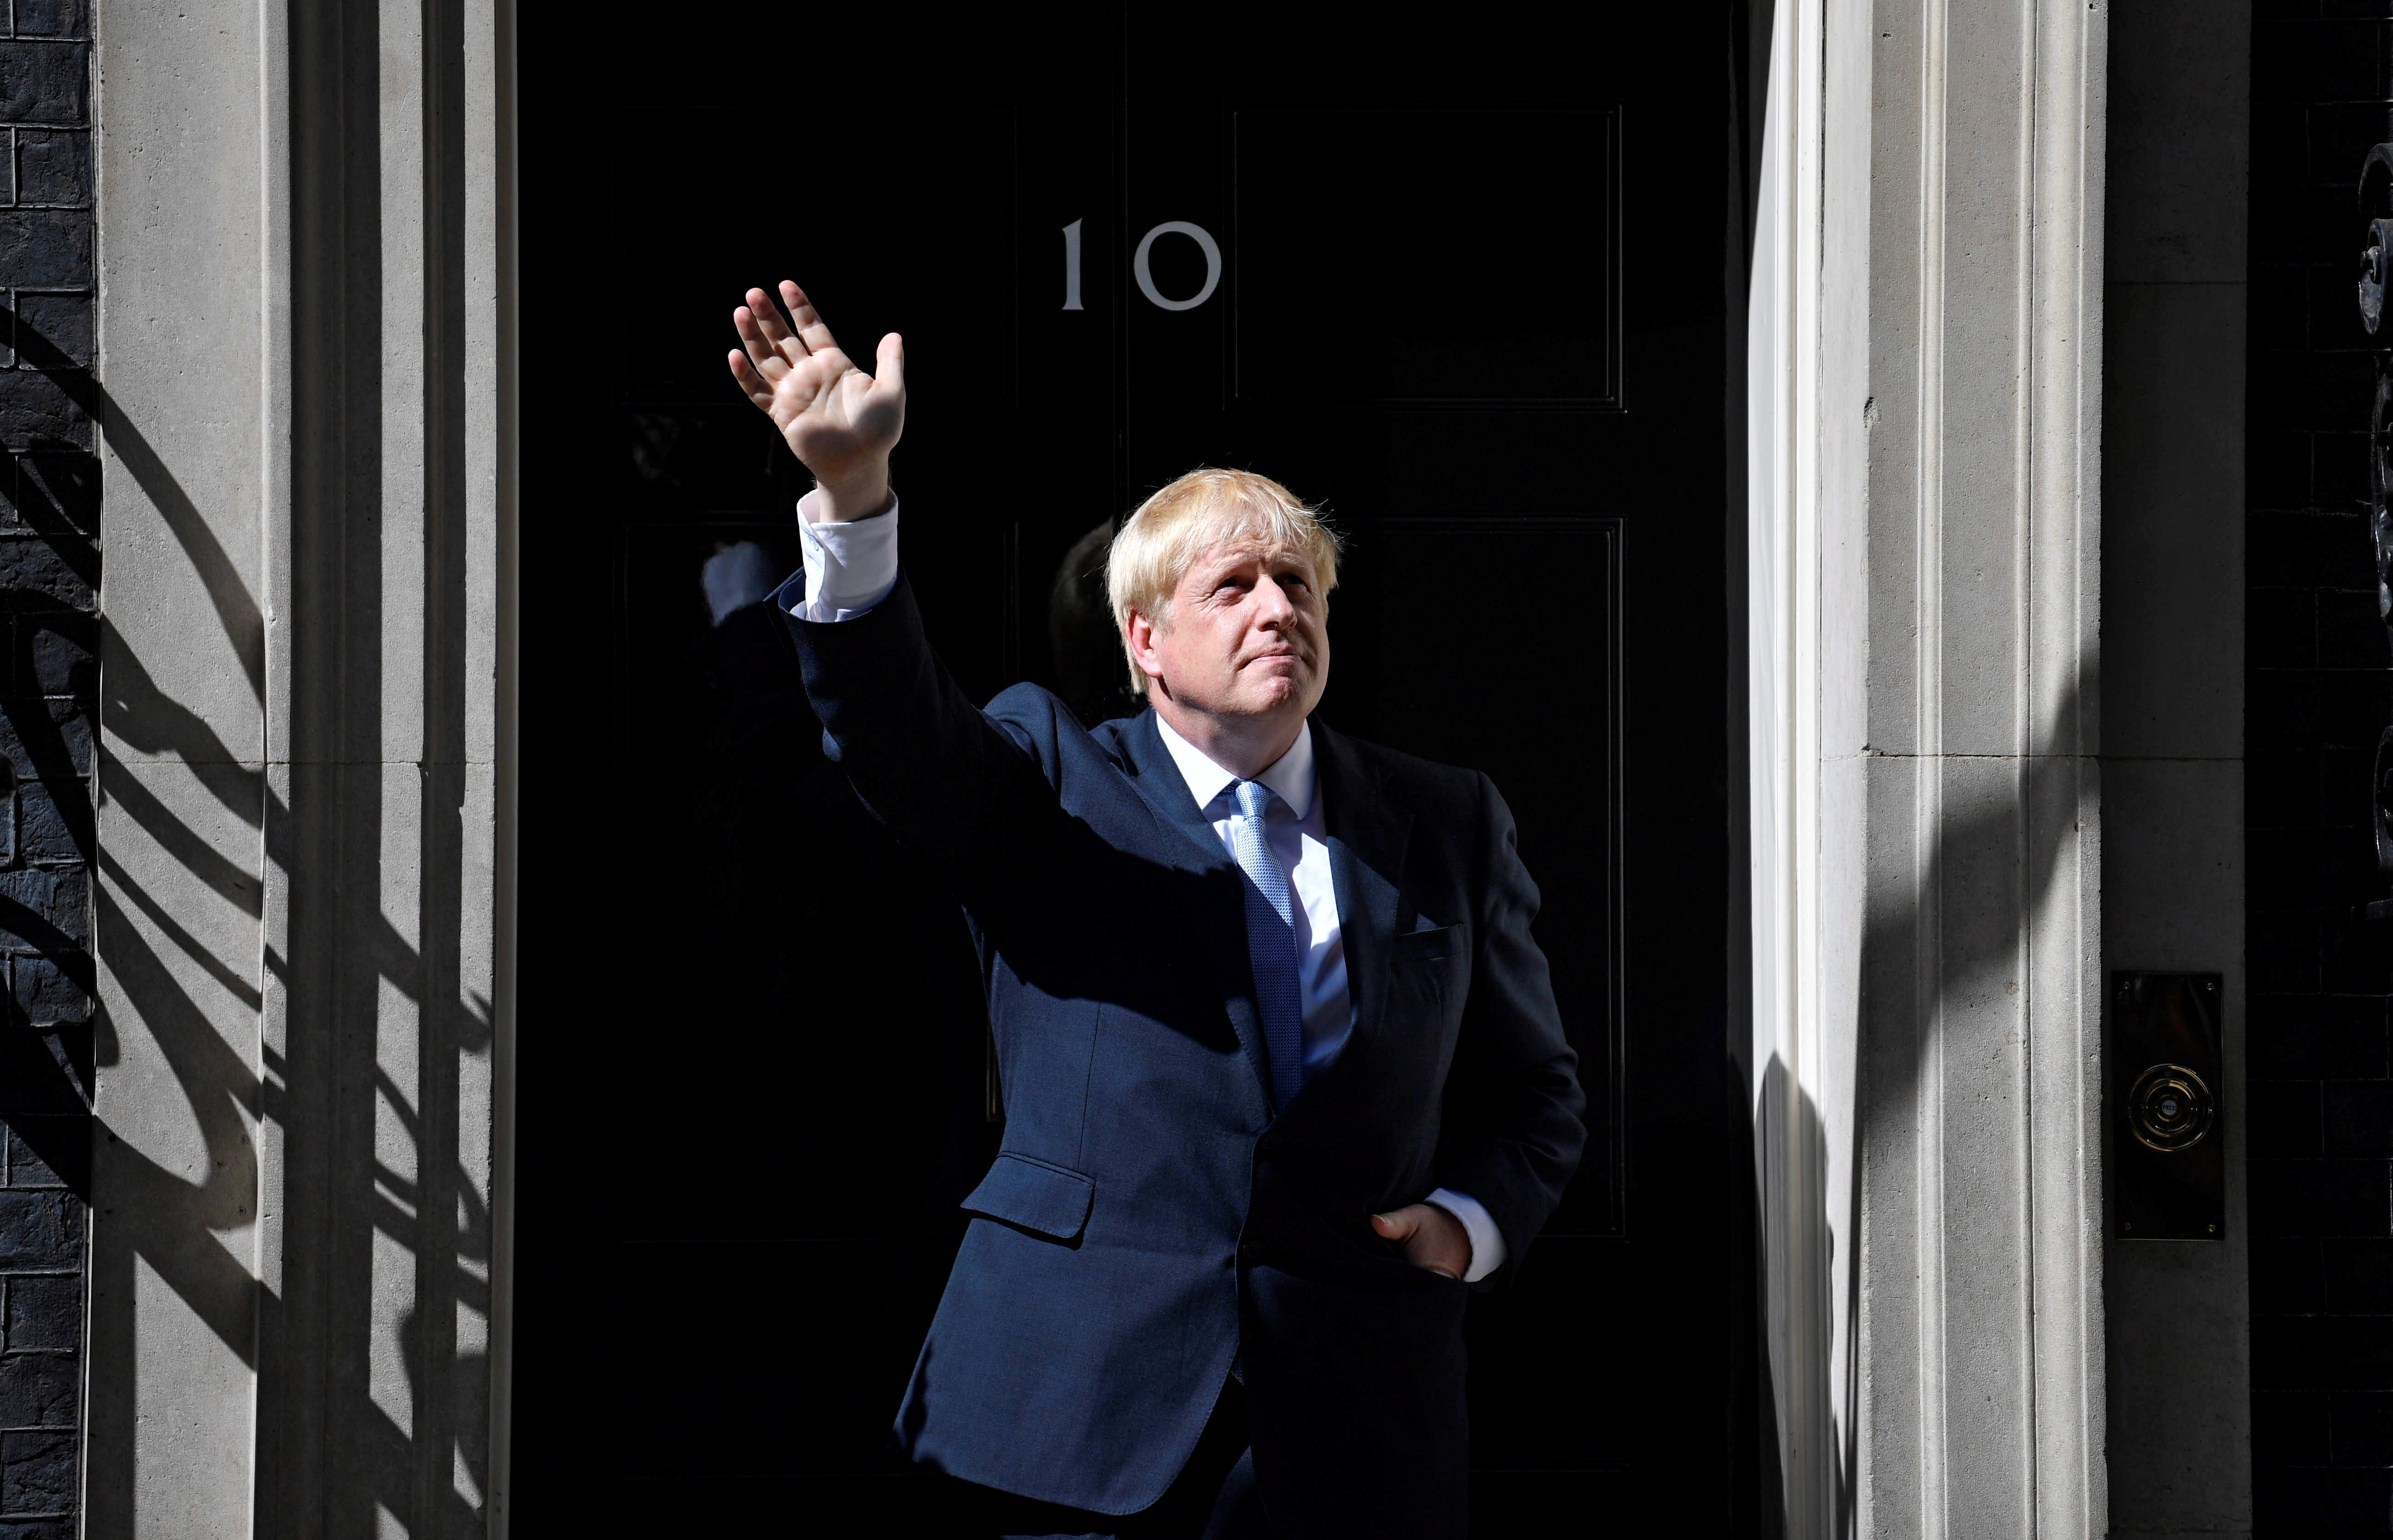 Primer ministre britanic Boris Johnson 10 Downing Street dimiteix lider grup diputats conservadors / Foto: Efe